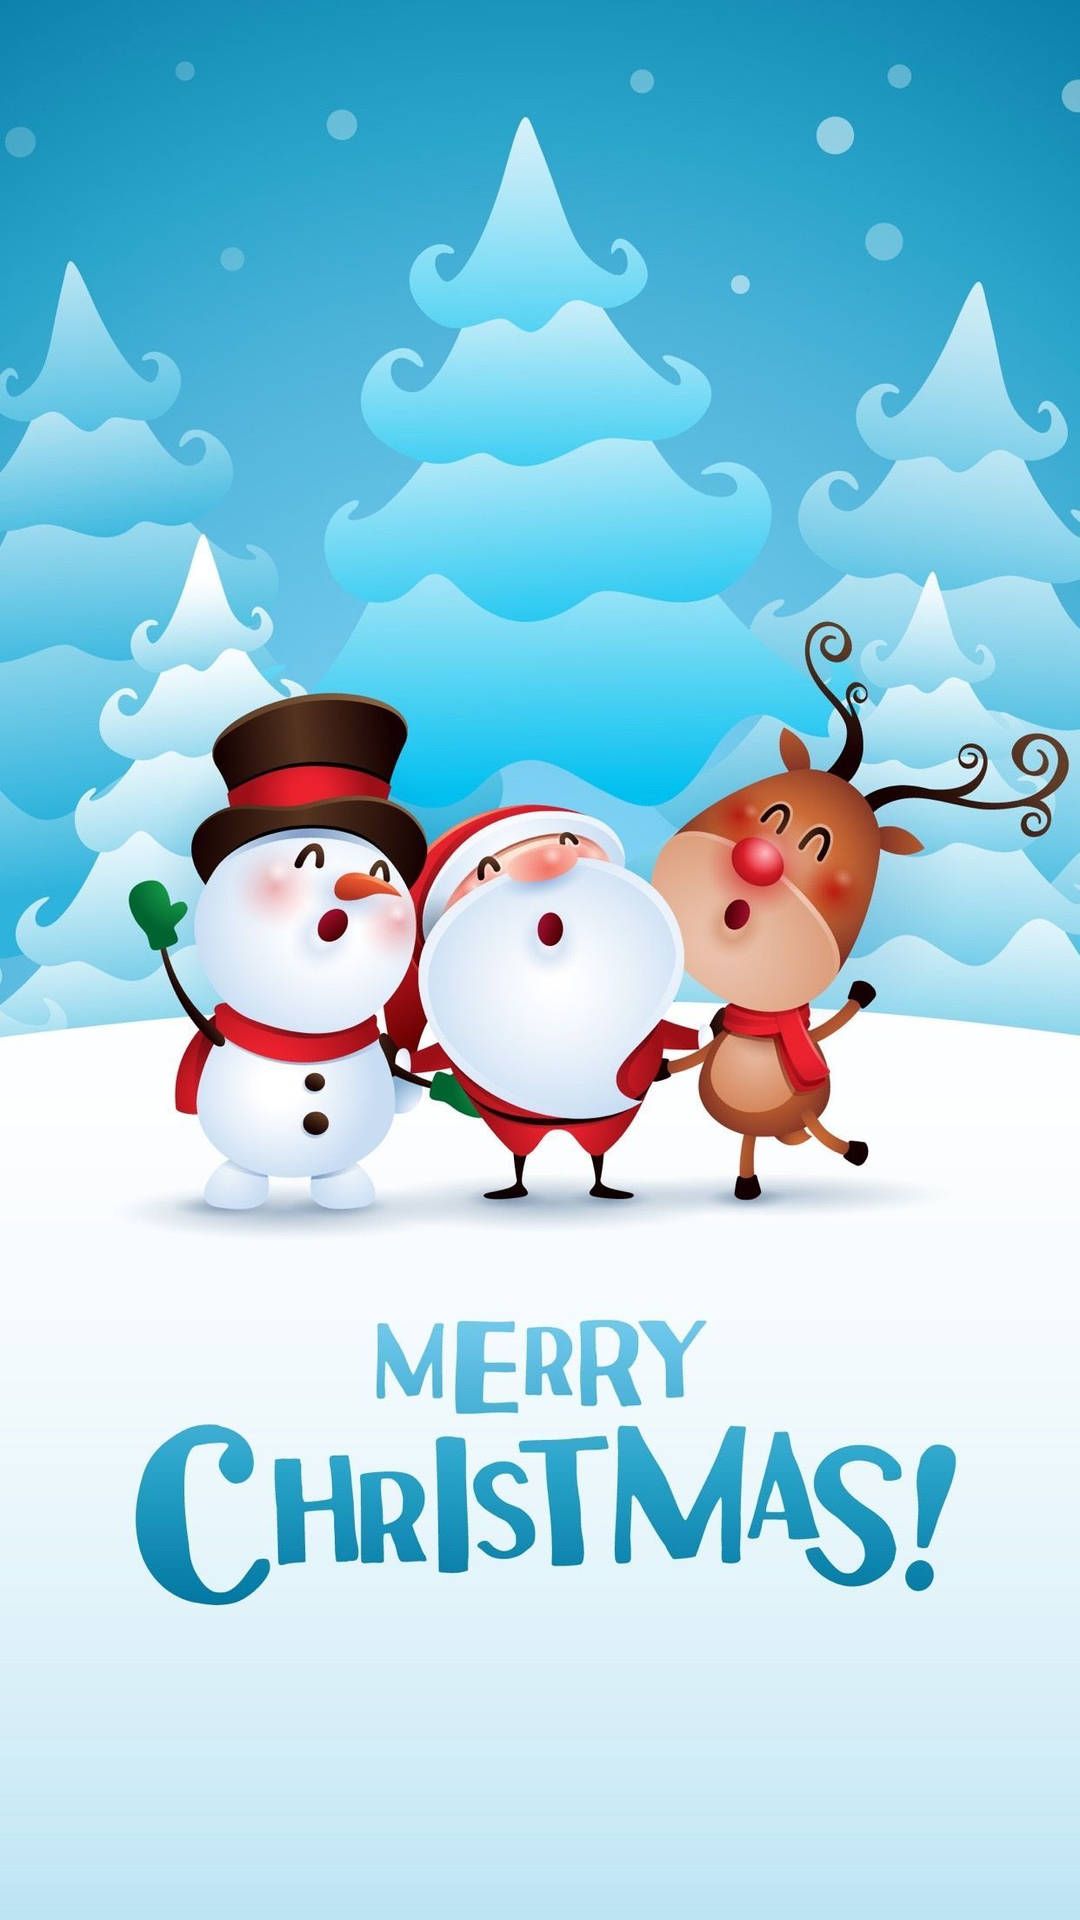 Free Cute Christmas Wallpaper Downloads, Cute Christmas Wallpaper for FREE